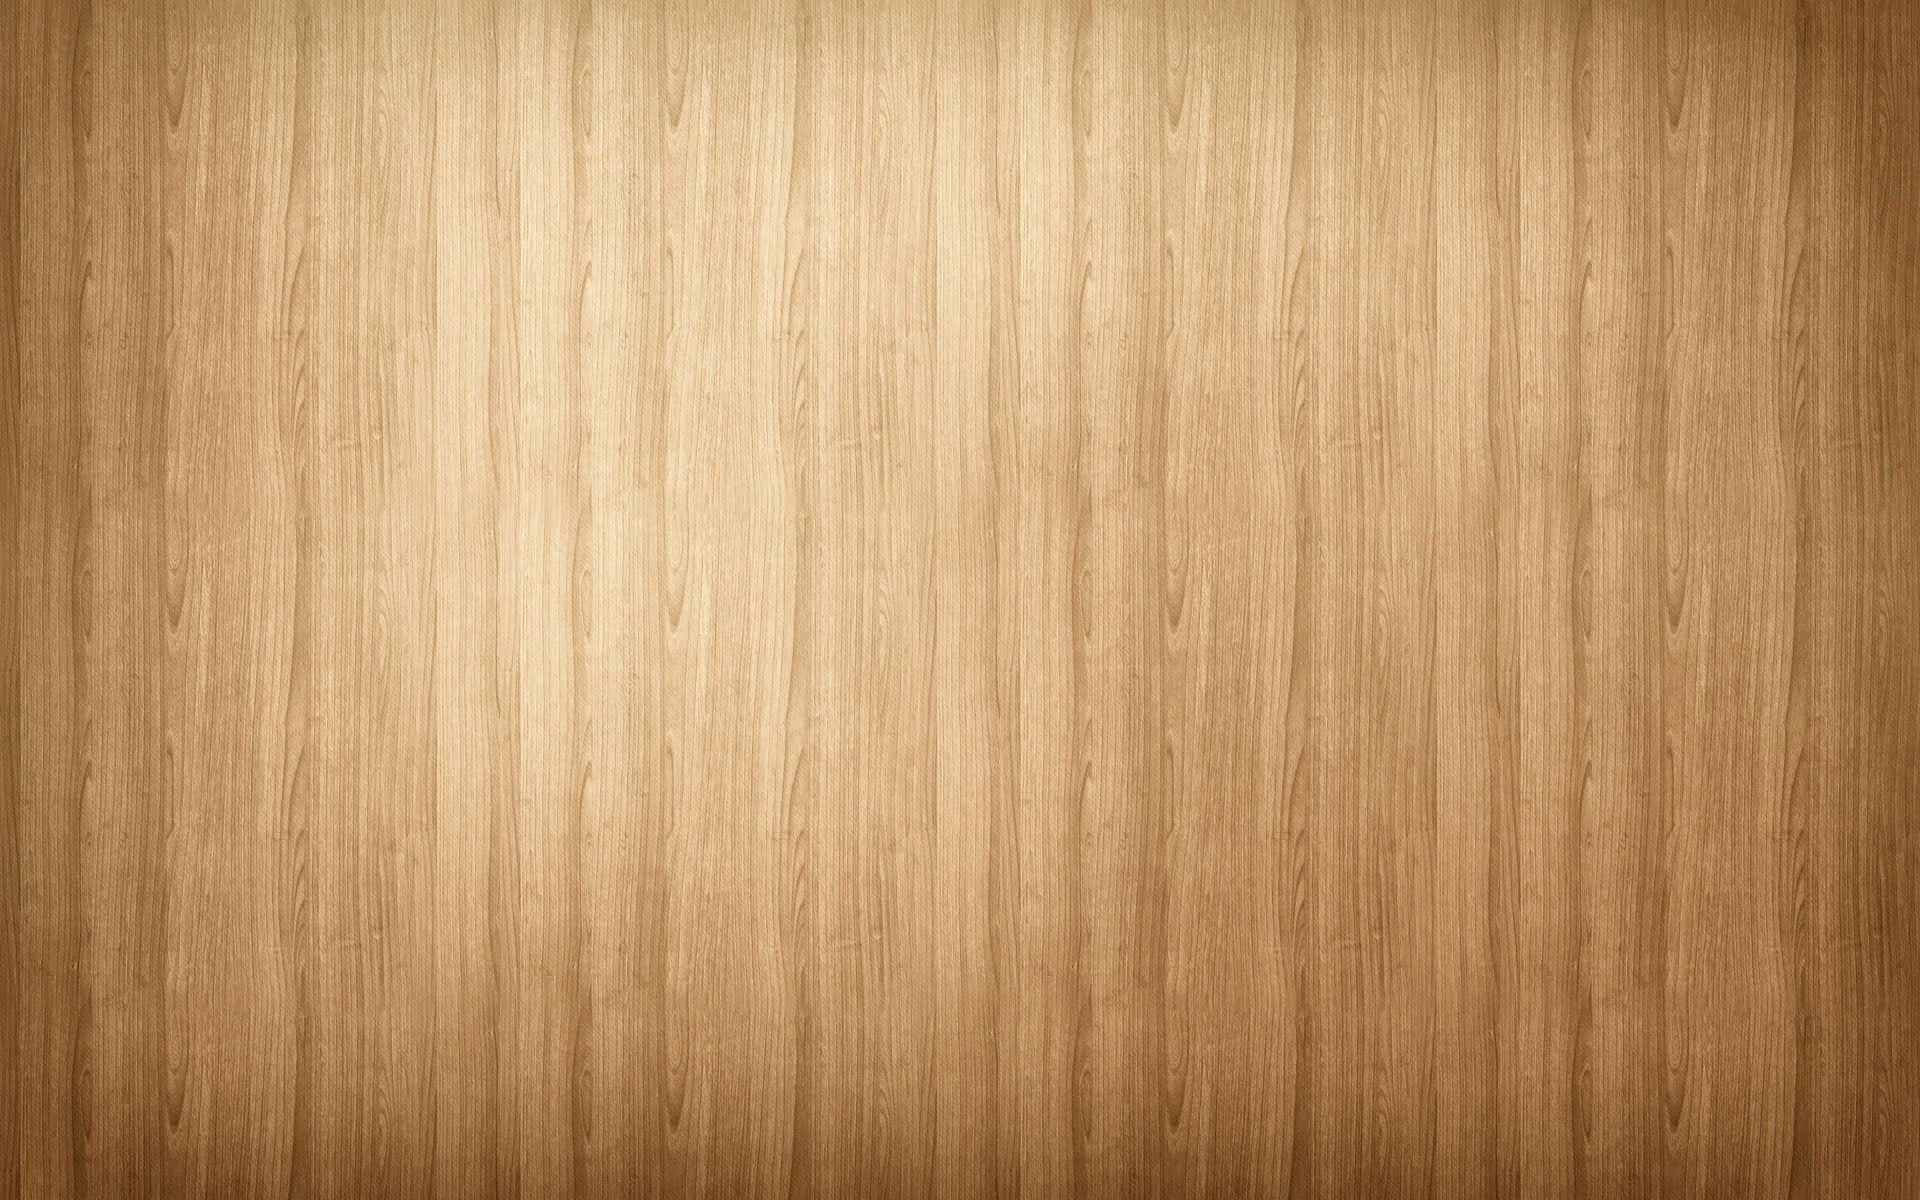 Light Brown Planks No Gaps Wooden Background Wallpaper